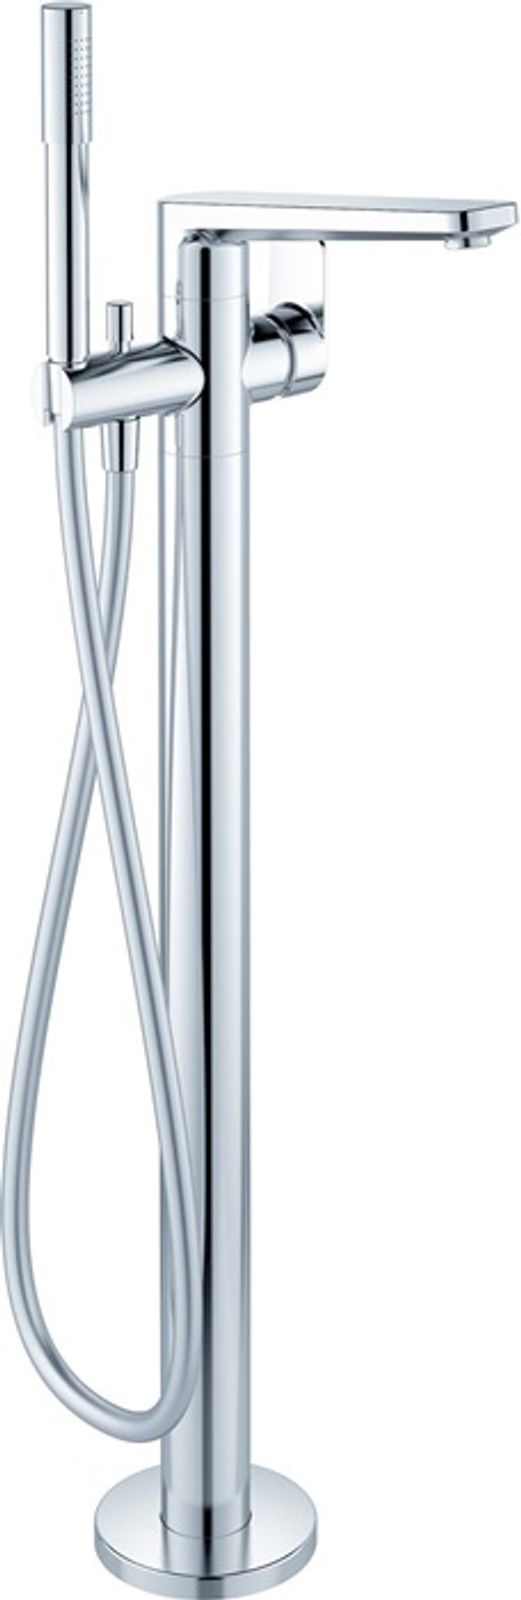 Ideal Standard freistehende Wannenarmatu Bausatz 2, m.Stick-HB, Ausld.220mm,Chrom